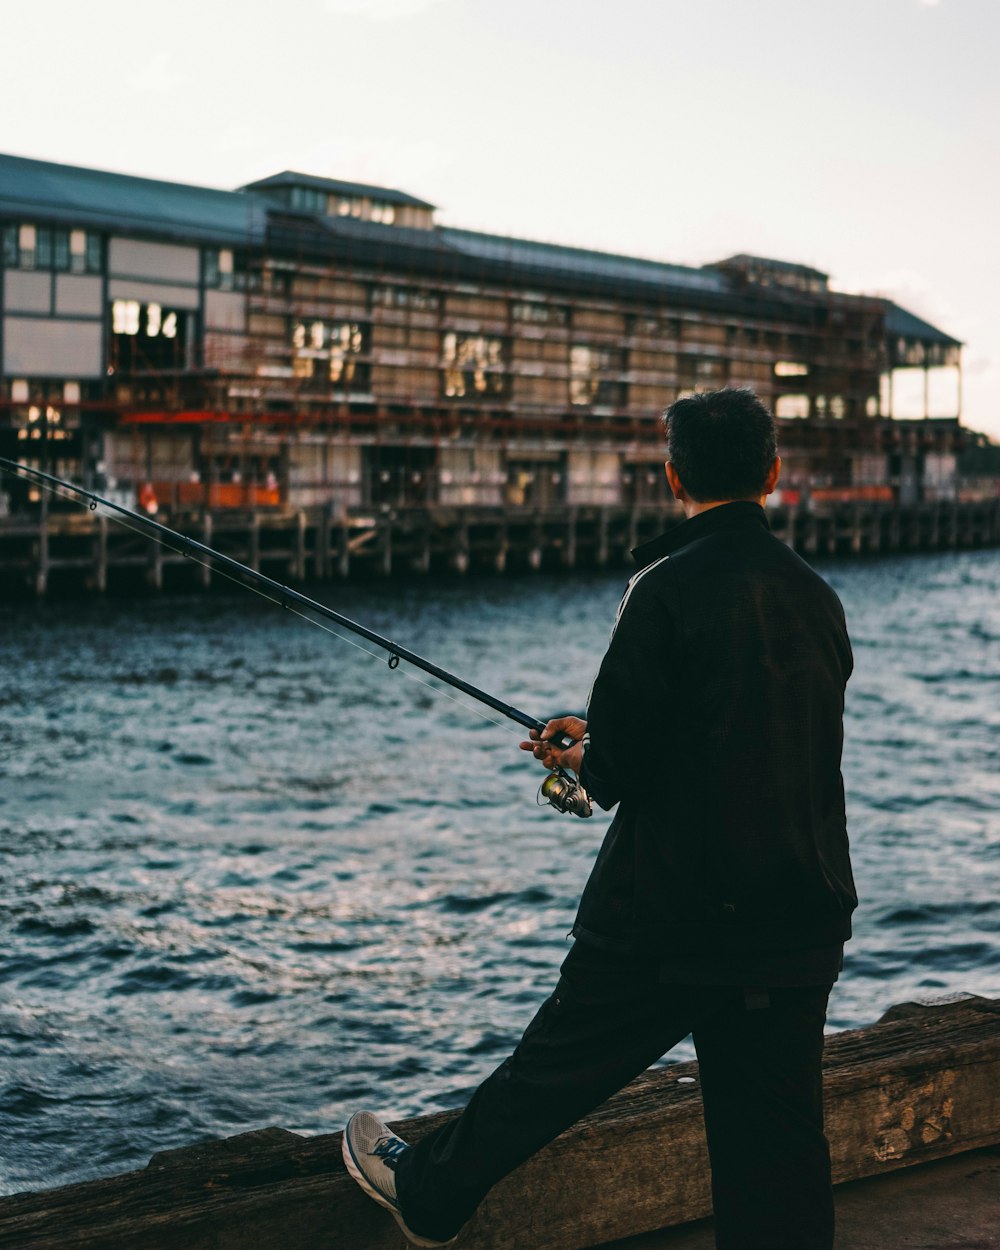 man fishing near dock photo - Free Water Image on Unsplash